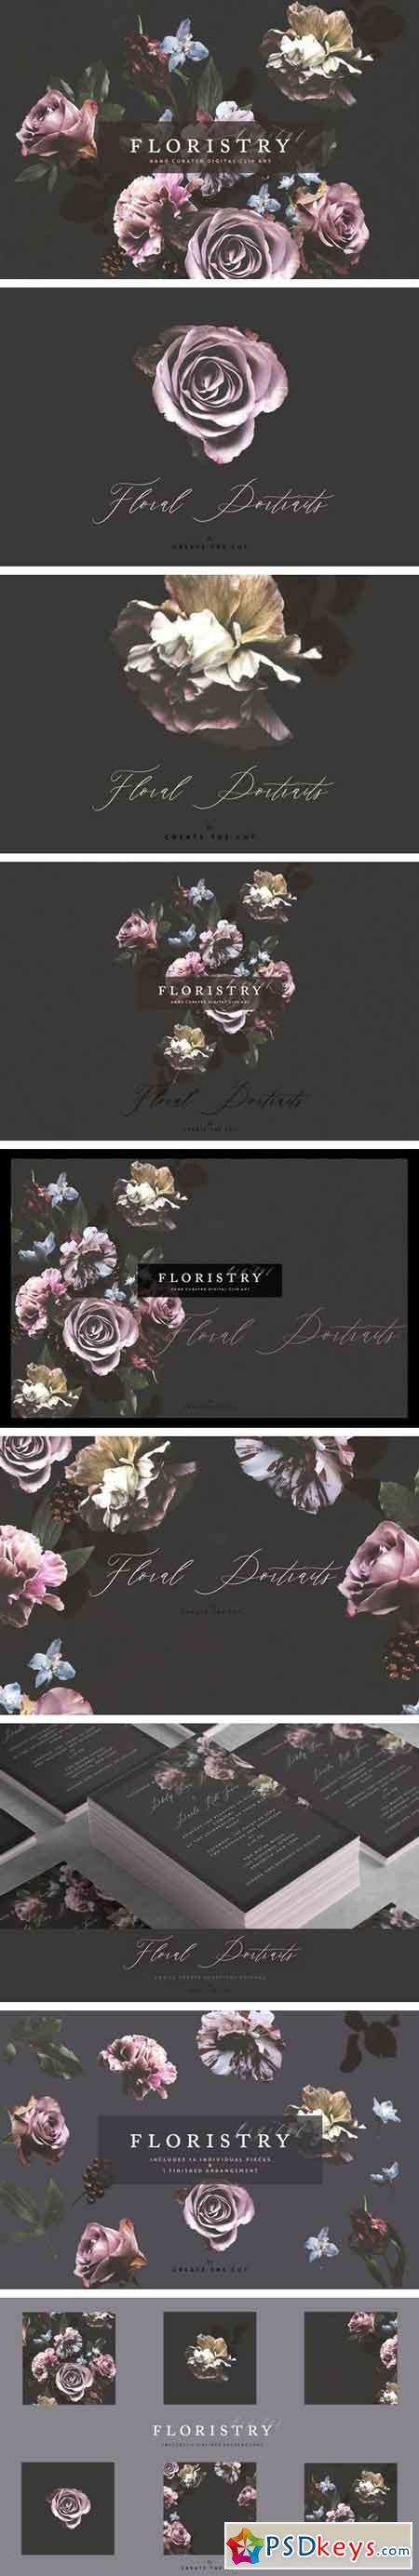 Digital Floristry - Floral Portraits 2076806